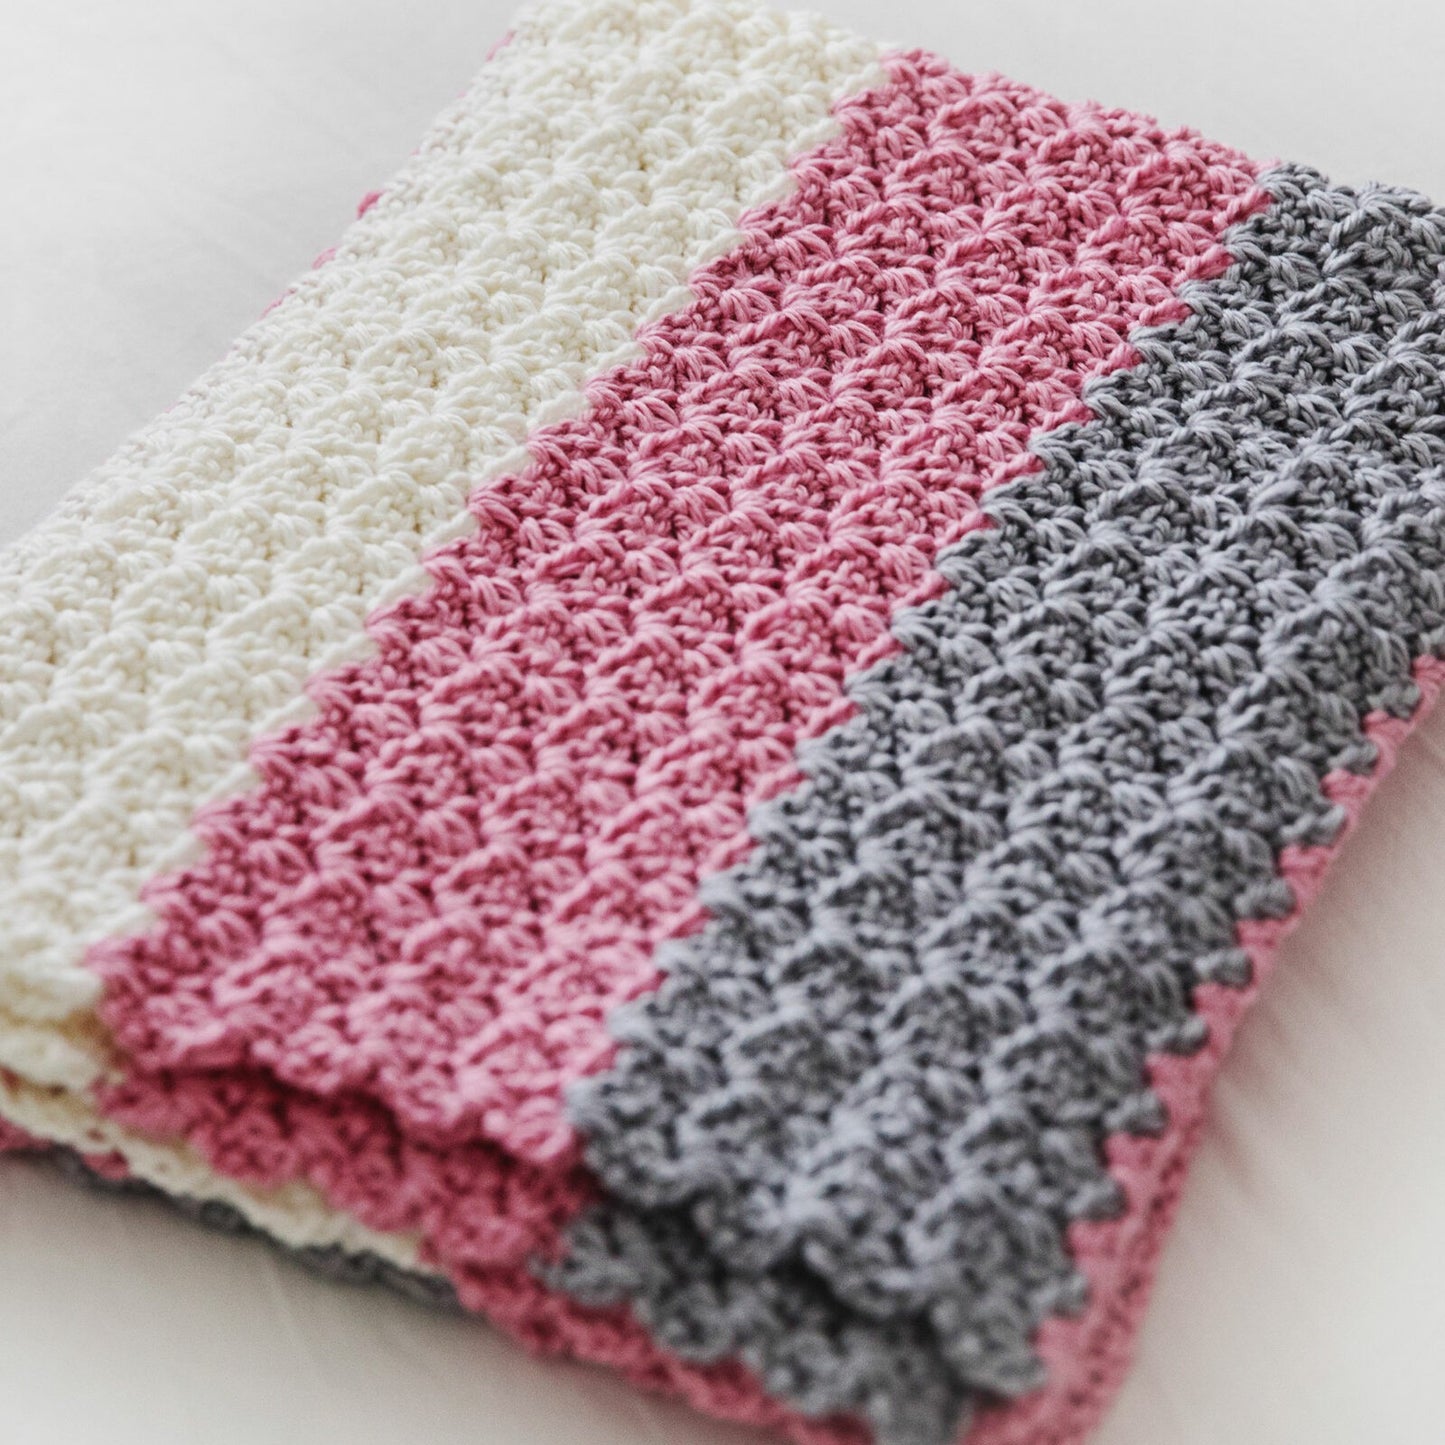 Beginner Crochet Class for Adults-Household items